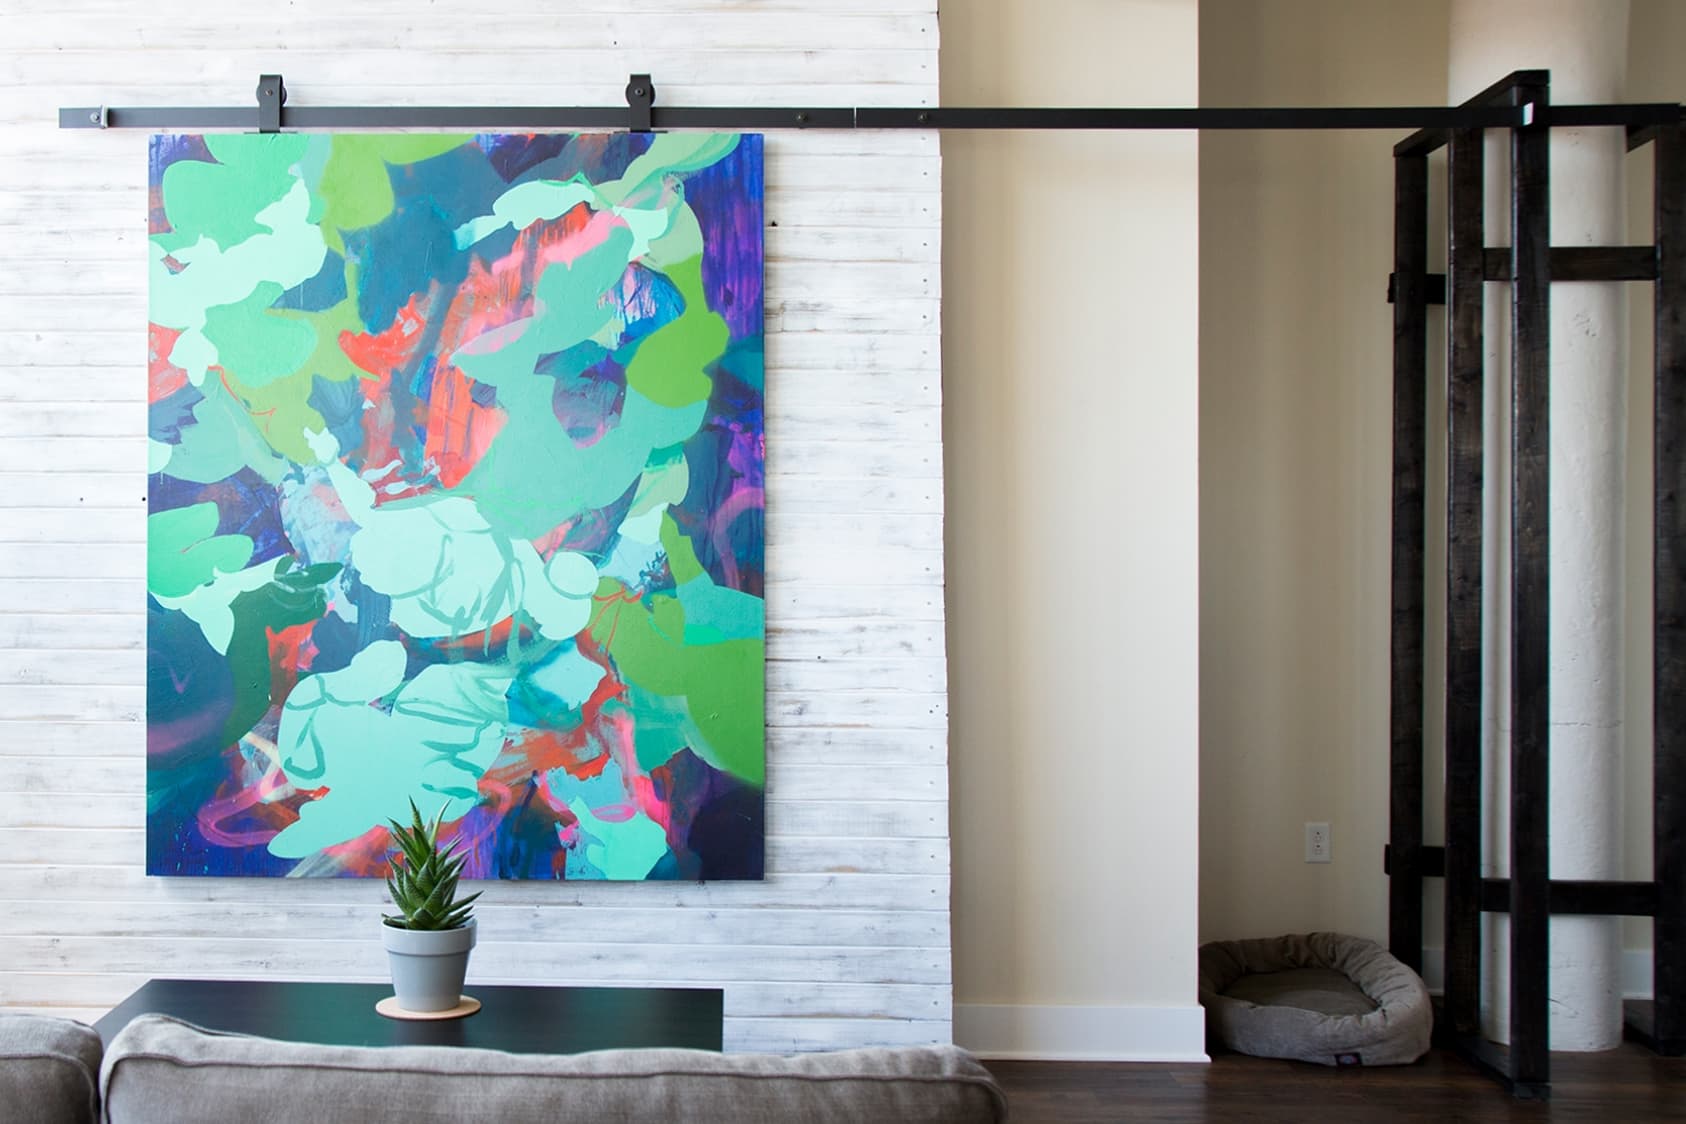 Styling A Frame TV Gallery Wall - Dream Green DIY